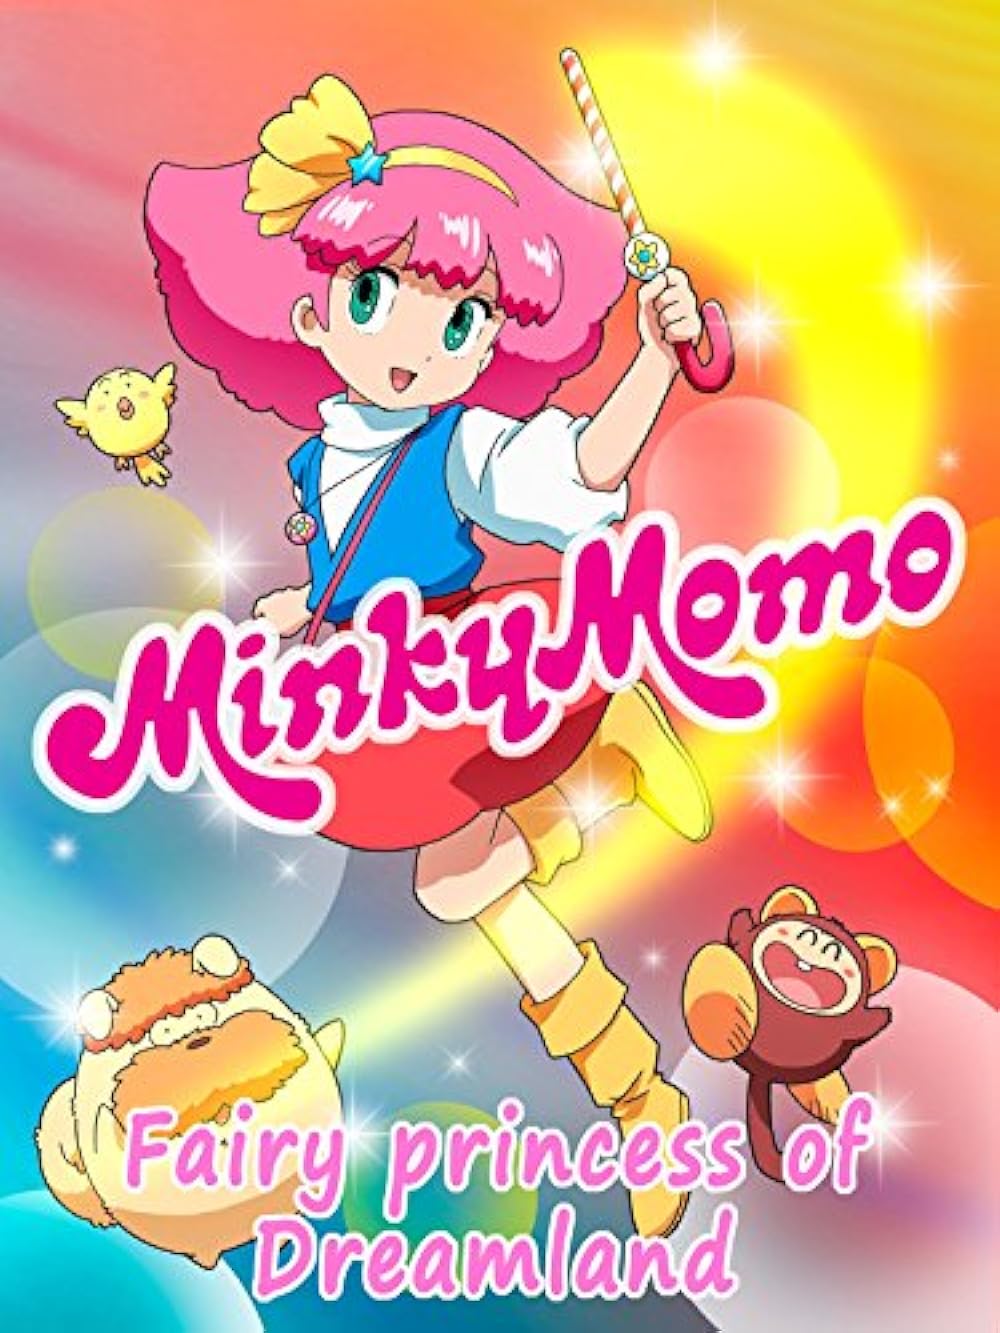 Minky Momo: The Fairy Princess of Dreamland